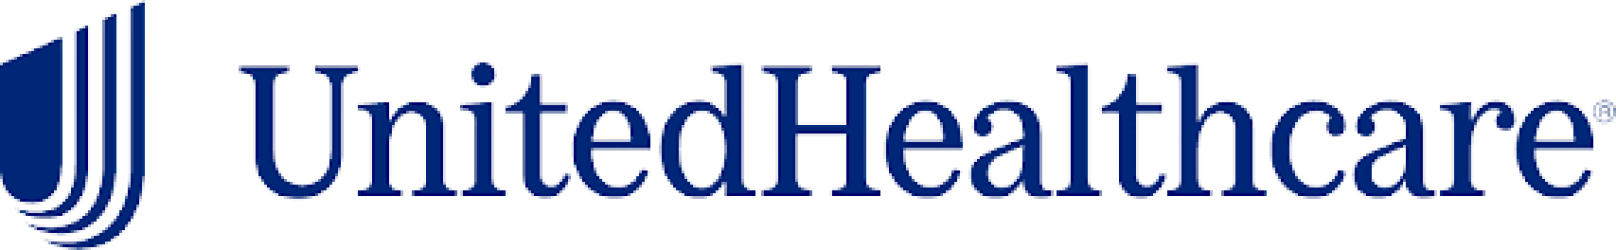 united healthcare logo